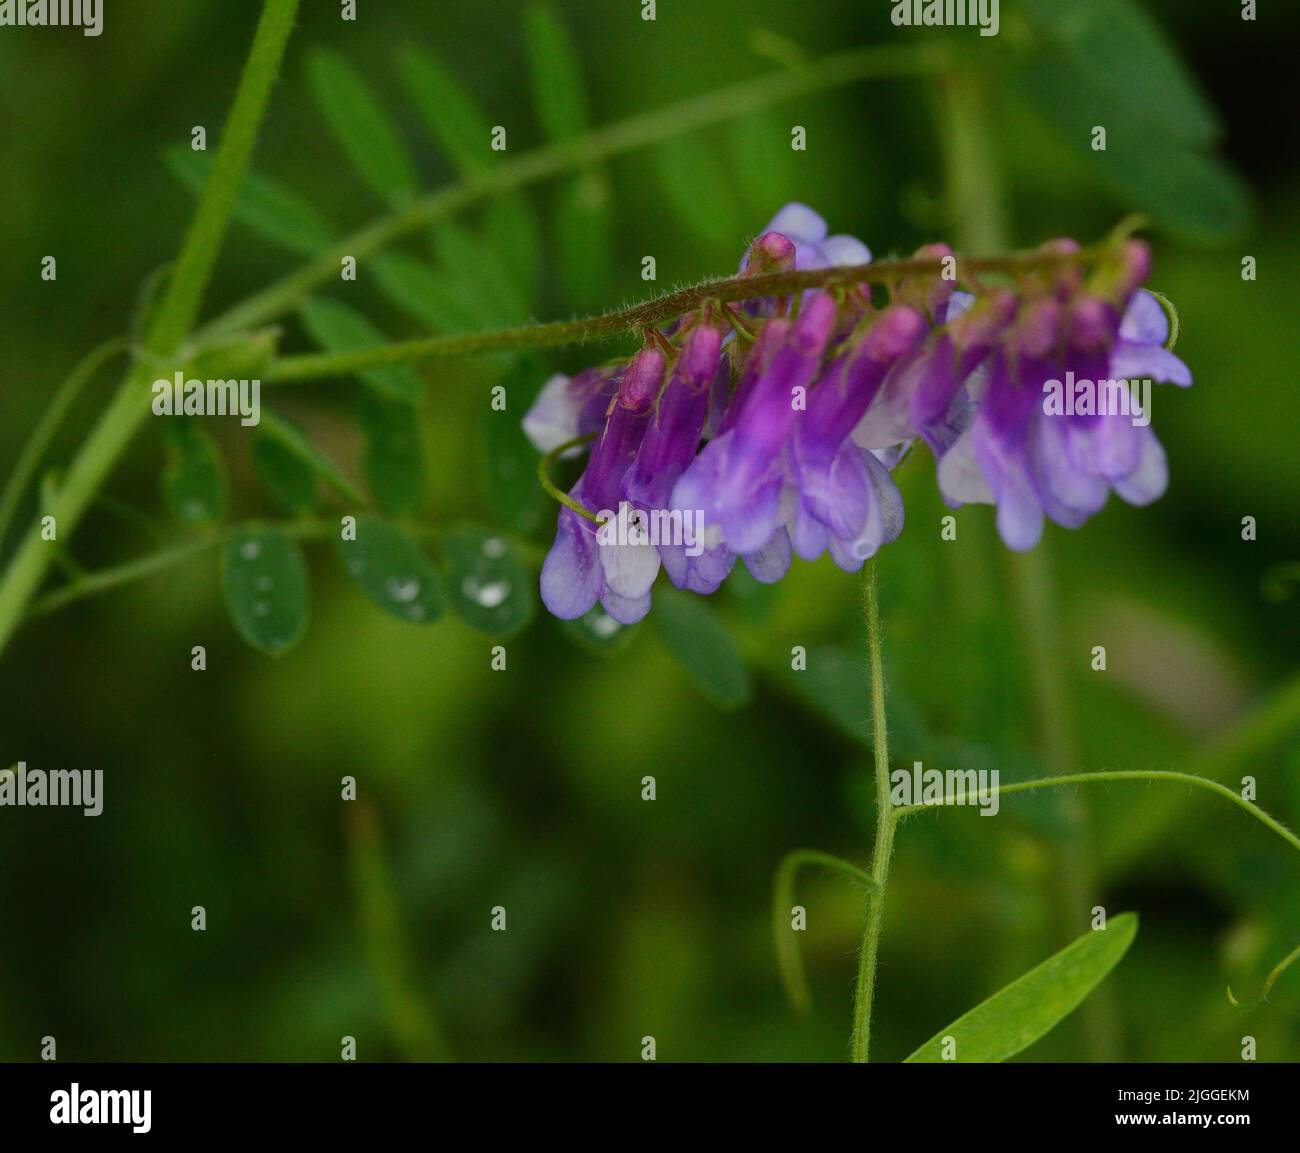 Closeup of Hairy Vetch (Vicia villosa) purple flowers against green vegetative background. Stock Photo